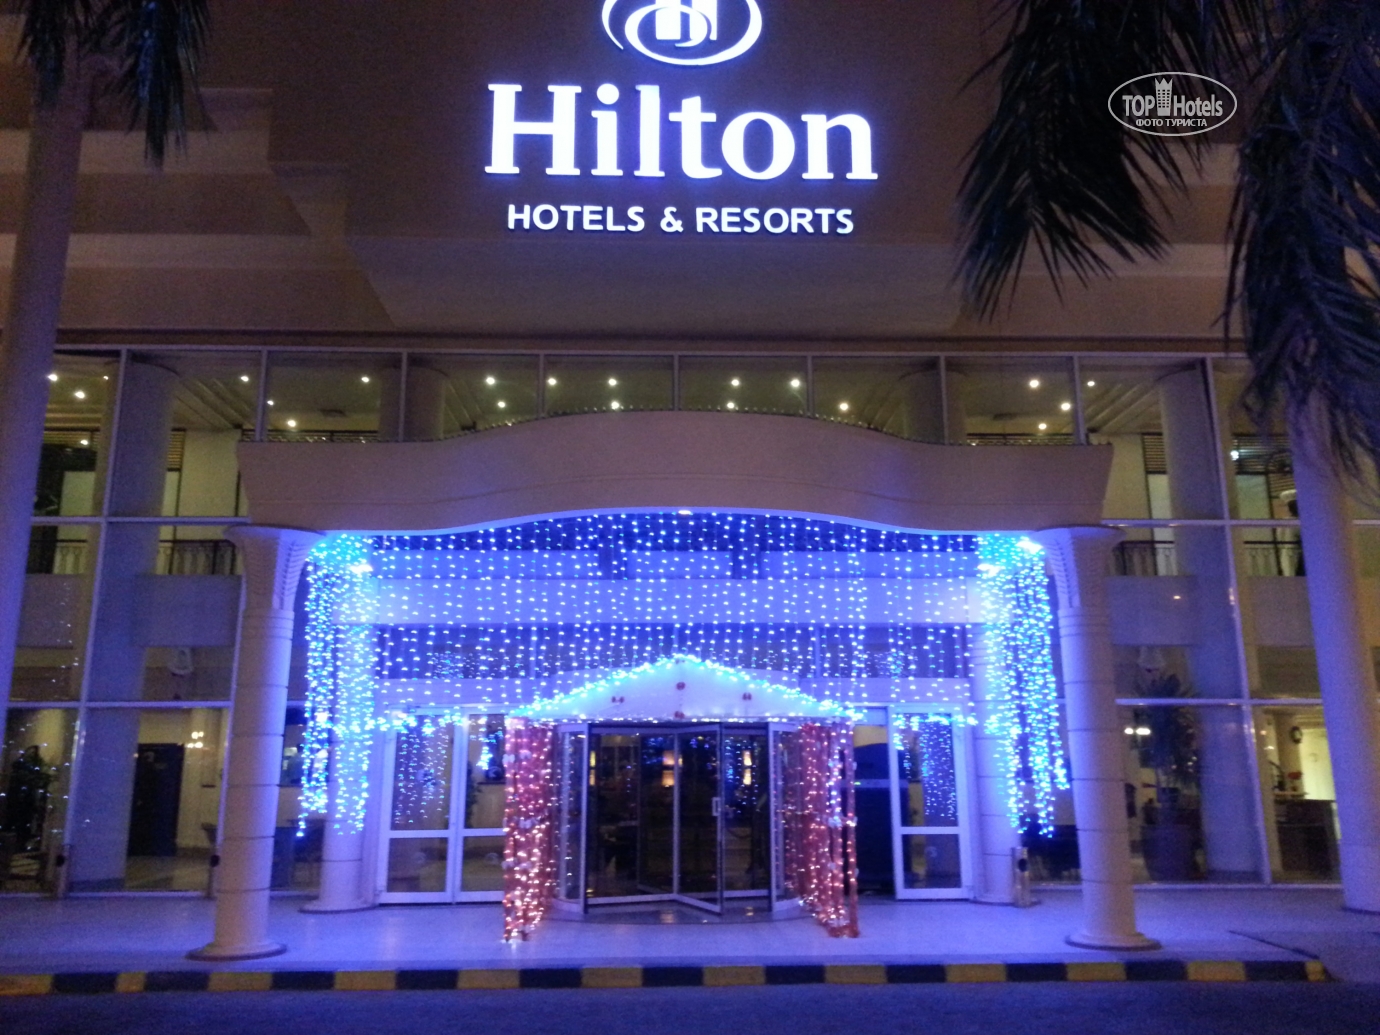 Hilton Hotels Gui Pastebin - roblox hilton hotels v5 uncopylocked roblox free bc